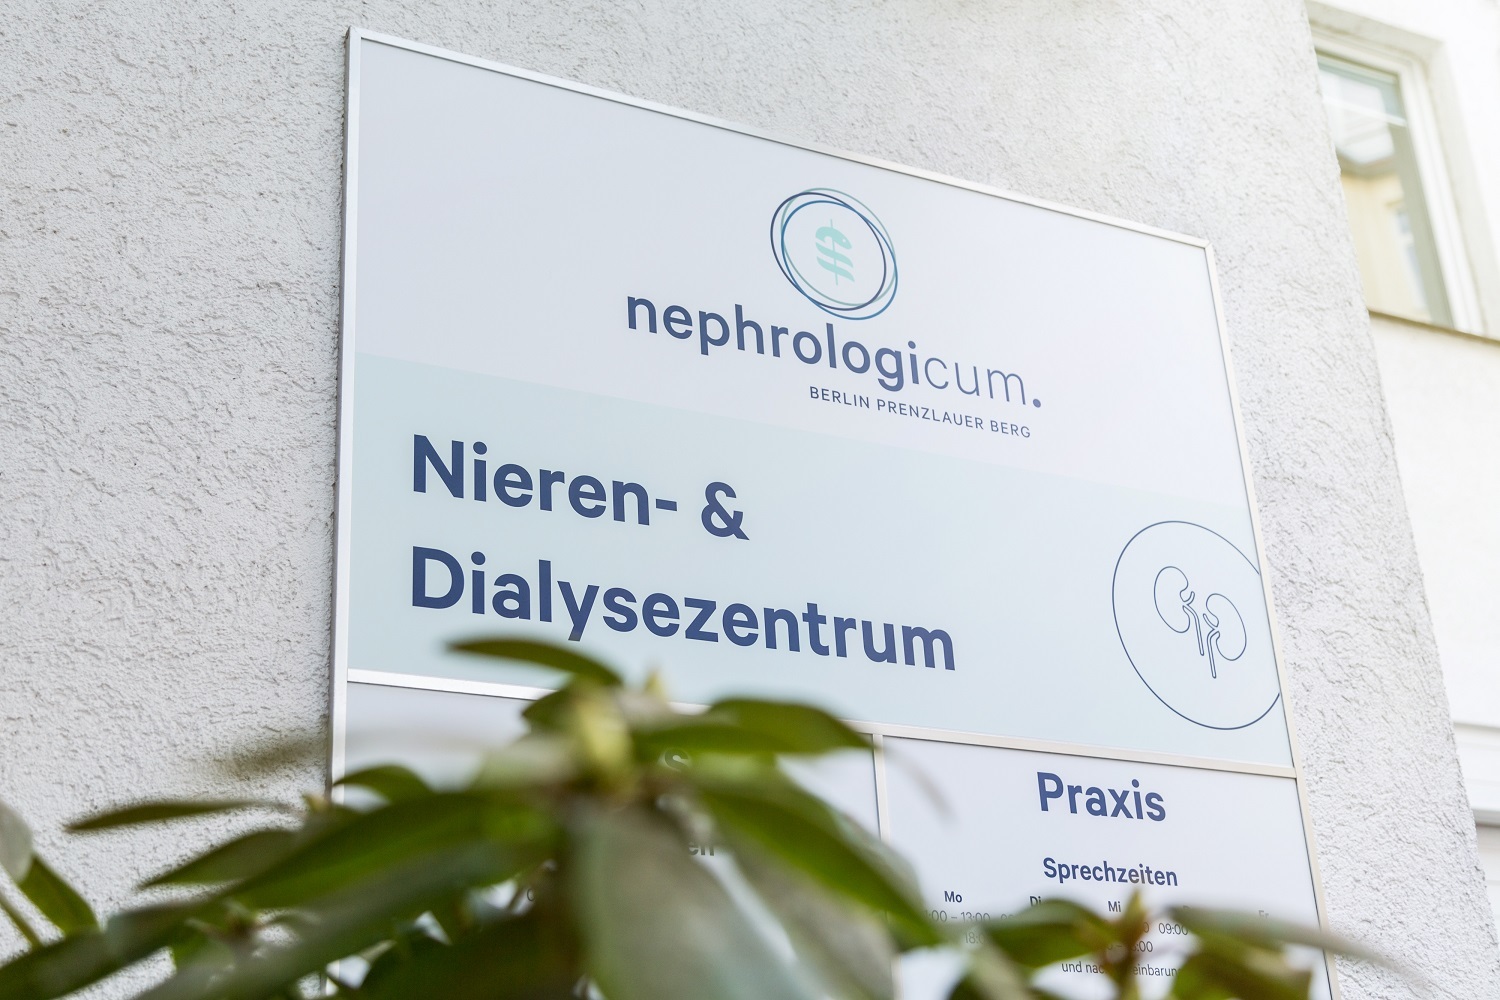 Nephrologicum Berlin Prenzlauer Berg